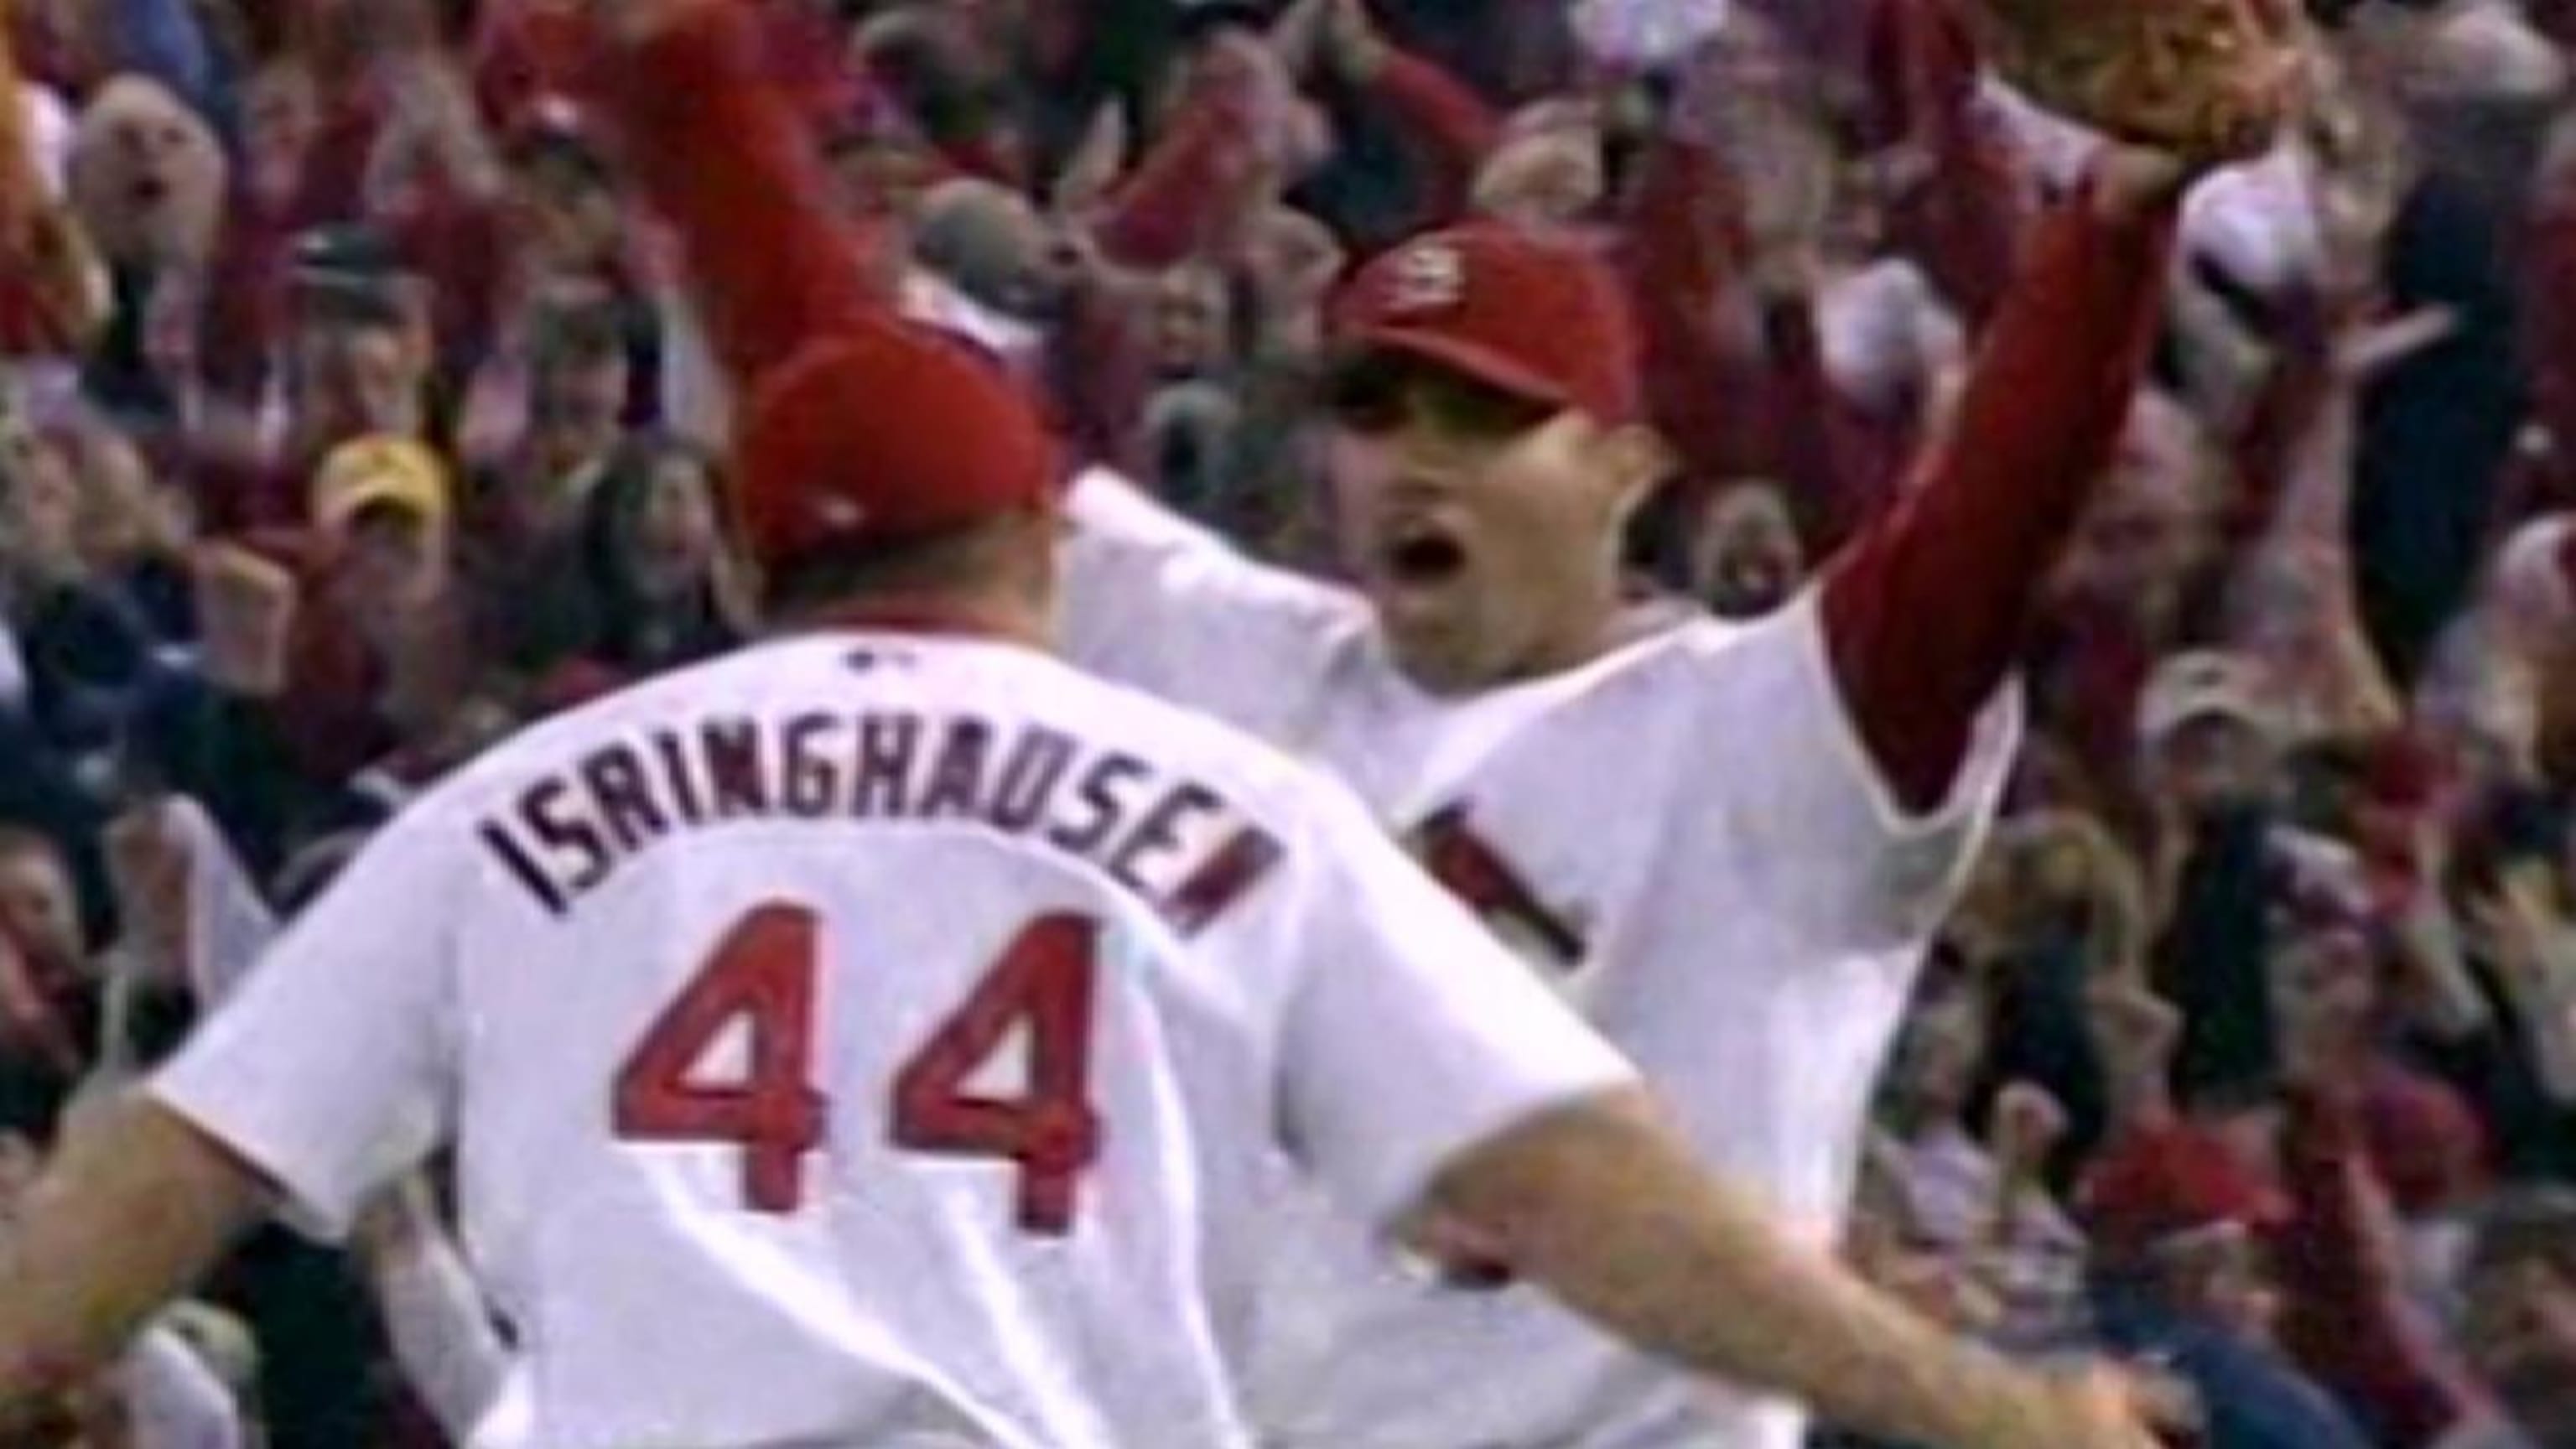 St Louis Cardinals 2004 Chris Carpenter MLB National League Championship Ring